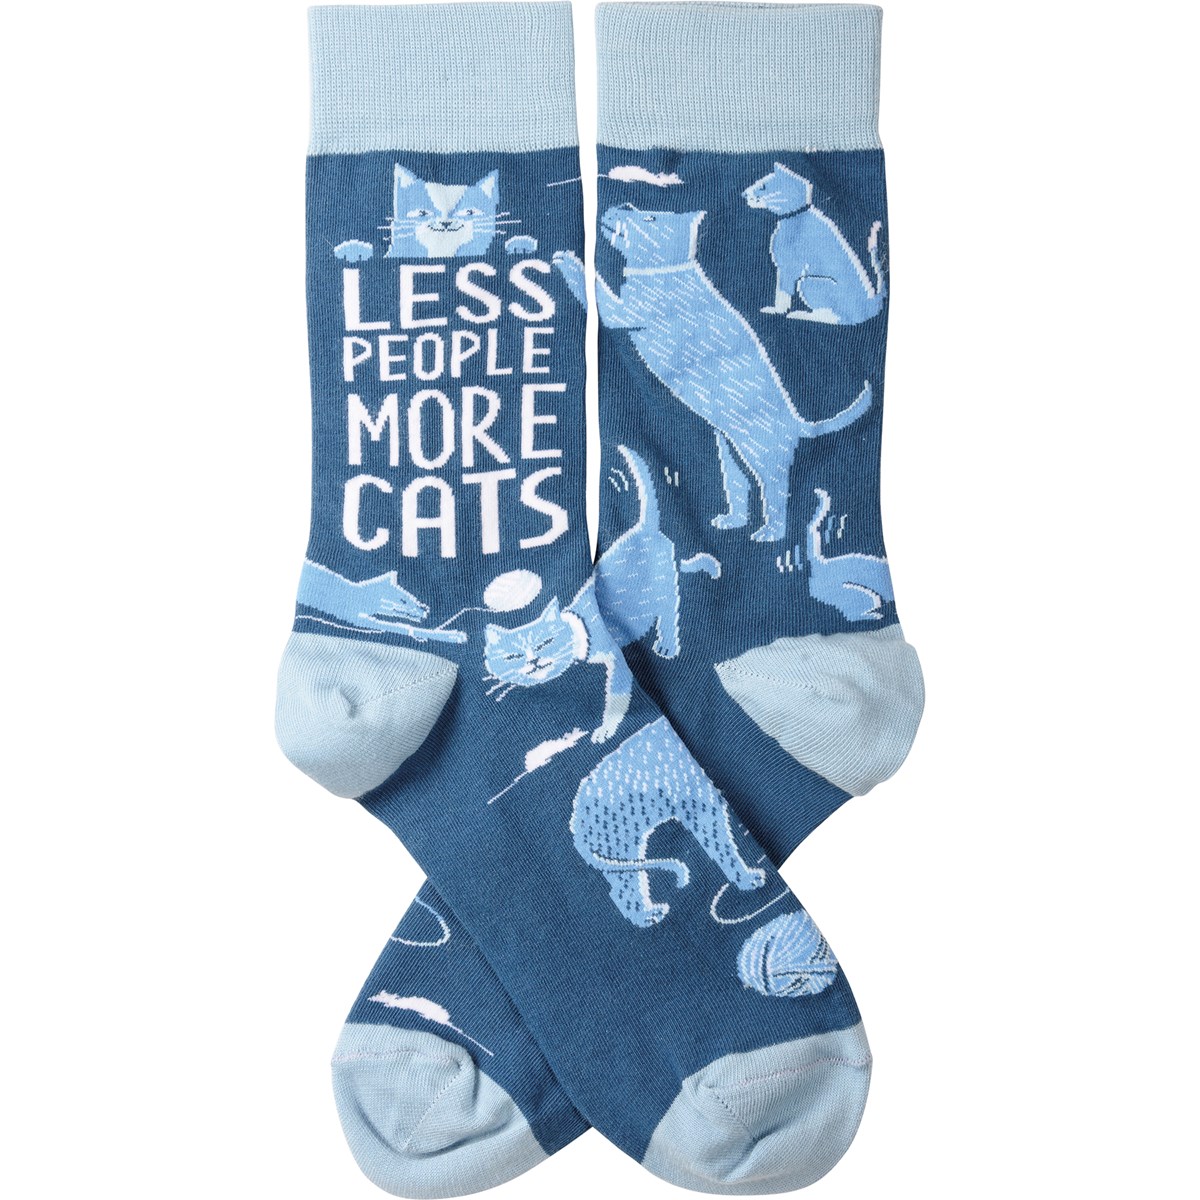 Less People More Cats Socks - Cotton, Nylon, Spandex